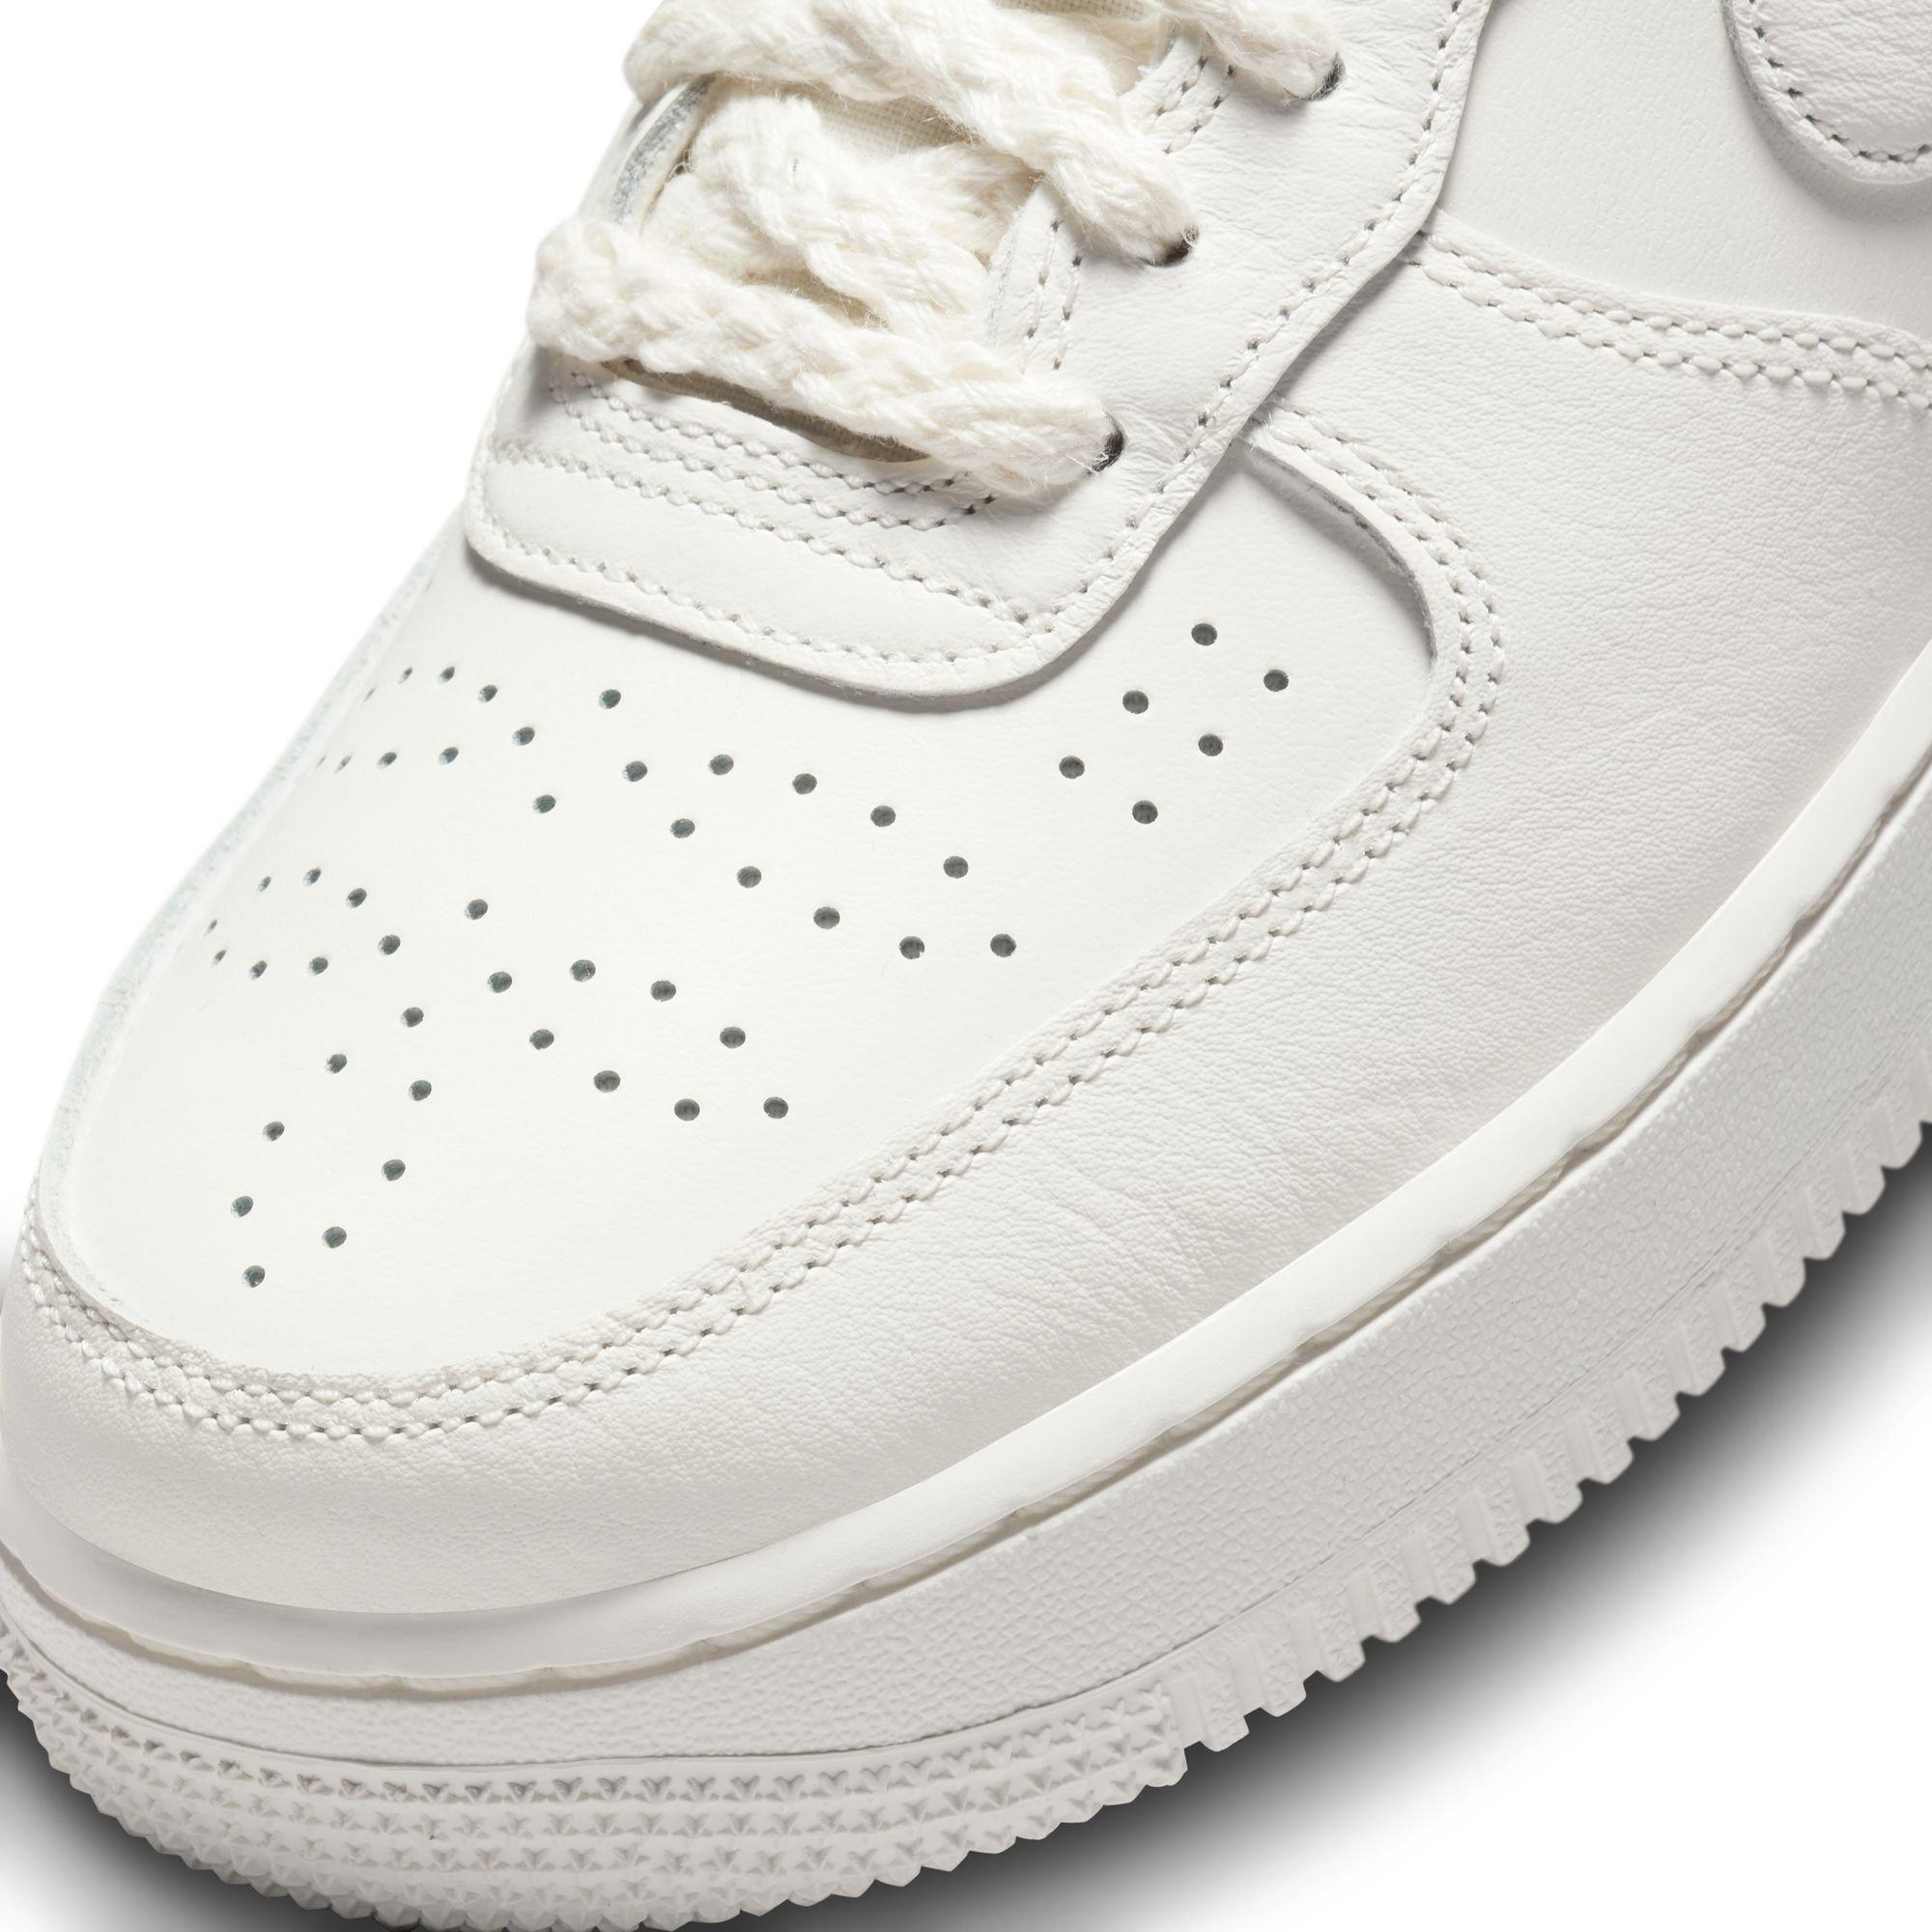 Nike, Shoes, Nike Air Force Lv8 Ksa Gs 5y Womens 65 Shoes White Black  Silver Ct468310